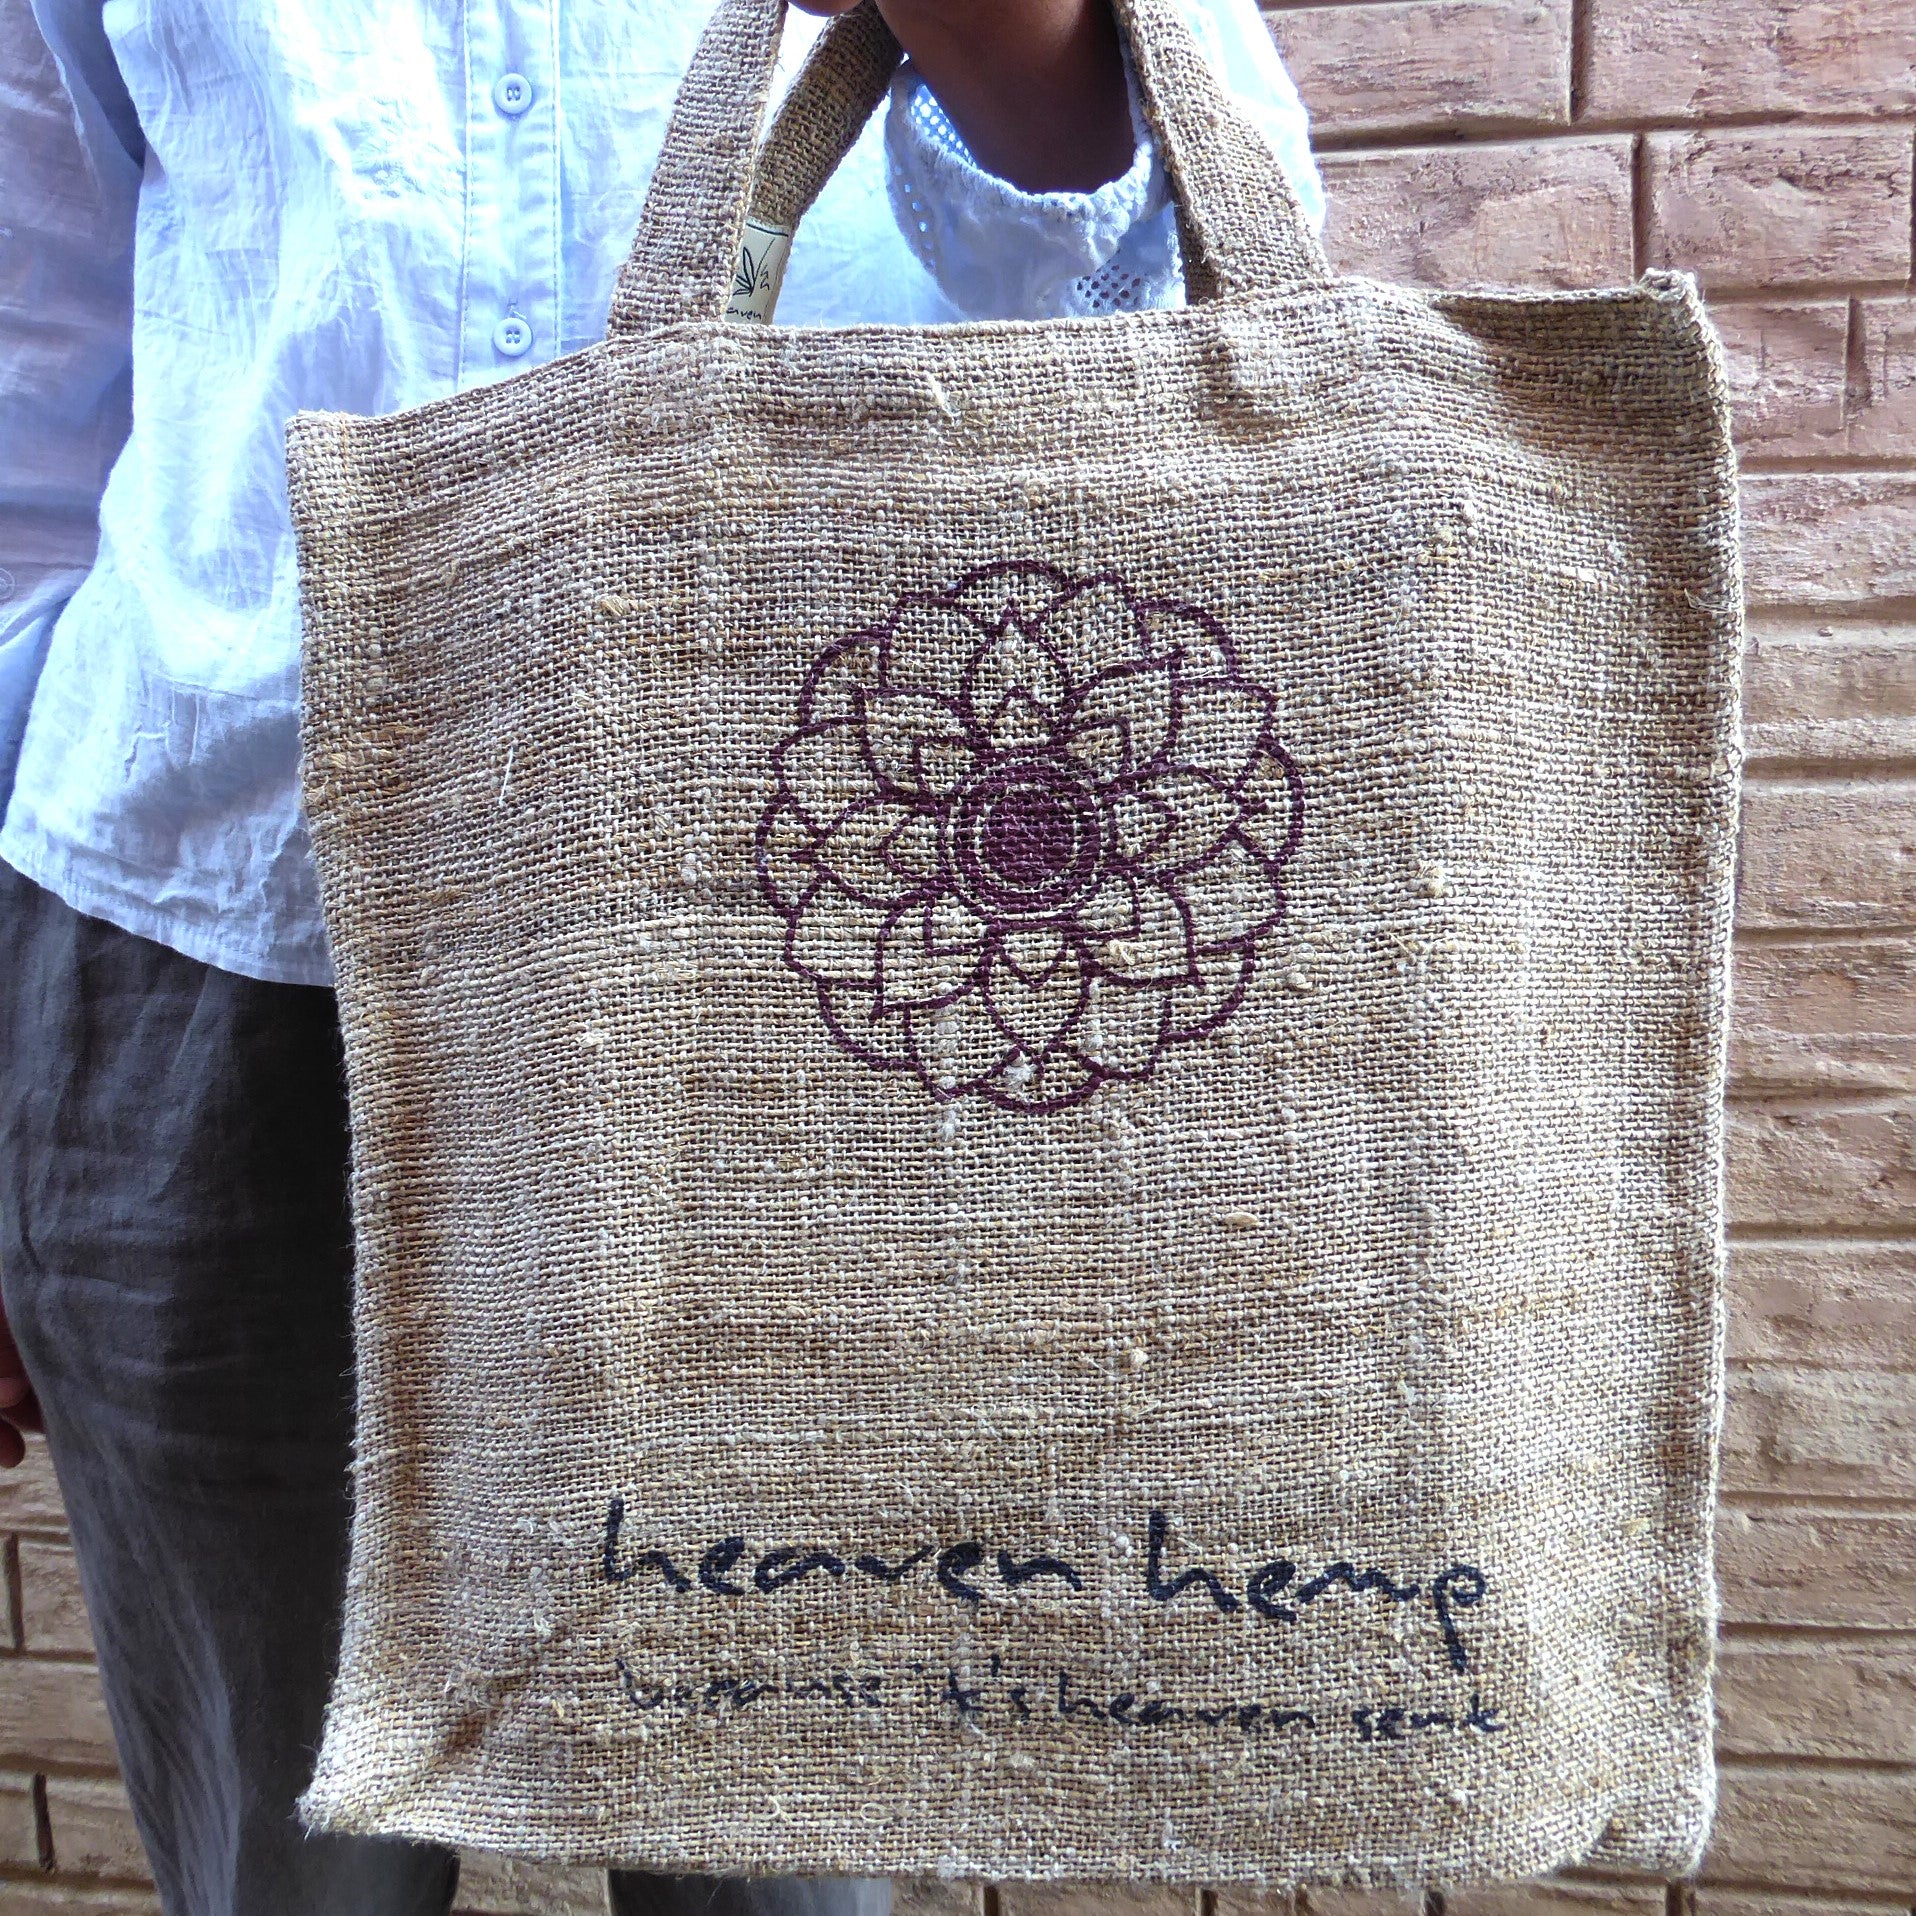 Bajura Hemp Tote Bag. Handprinted  (flower)